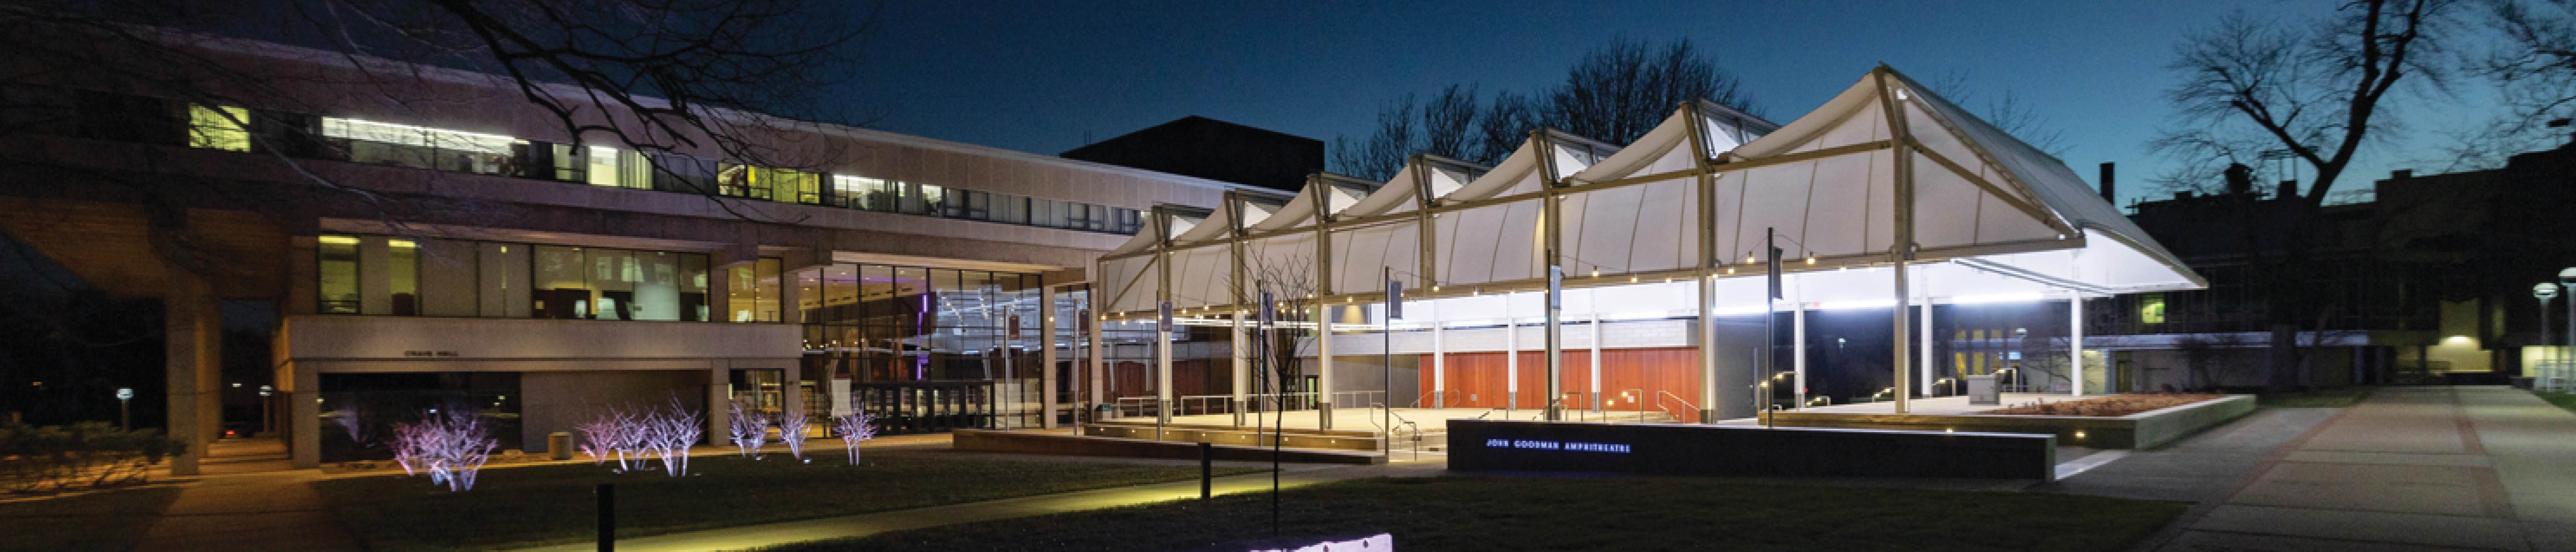 John Goodman Amphitheatre at MSU wins design award – Fabric Architecture Magazine